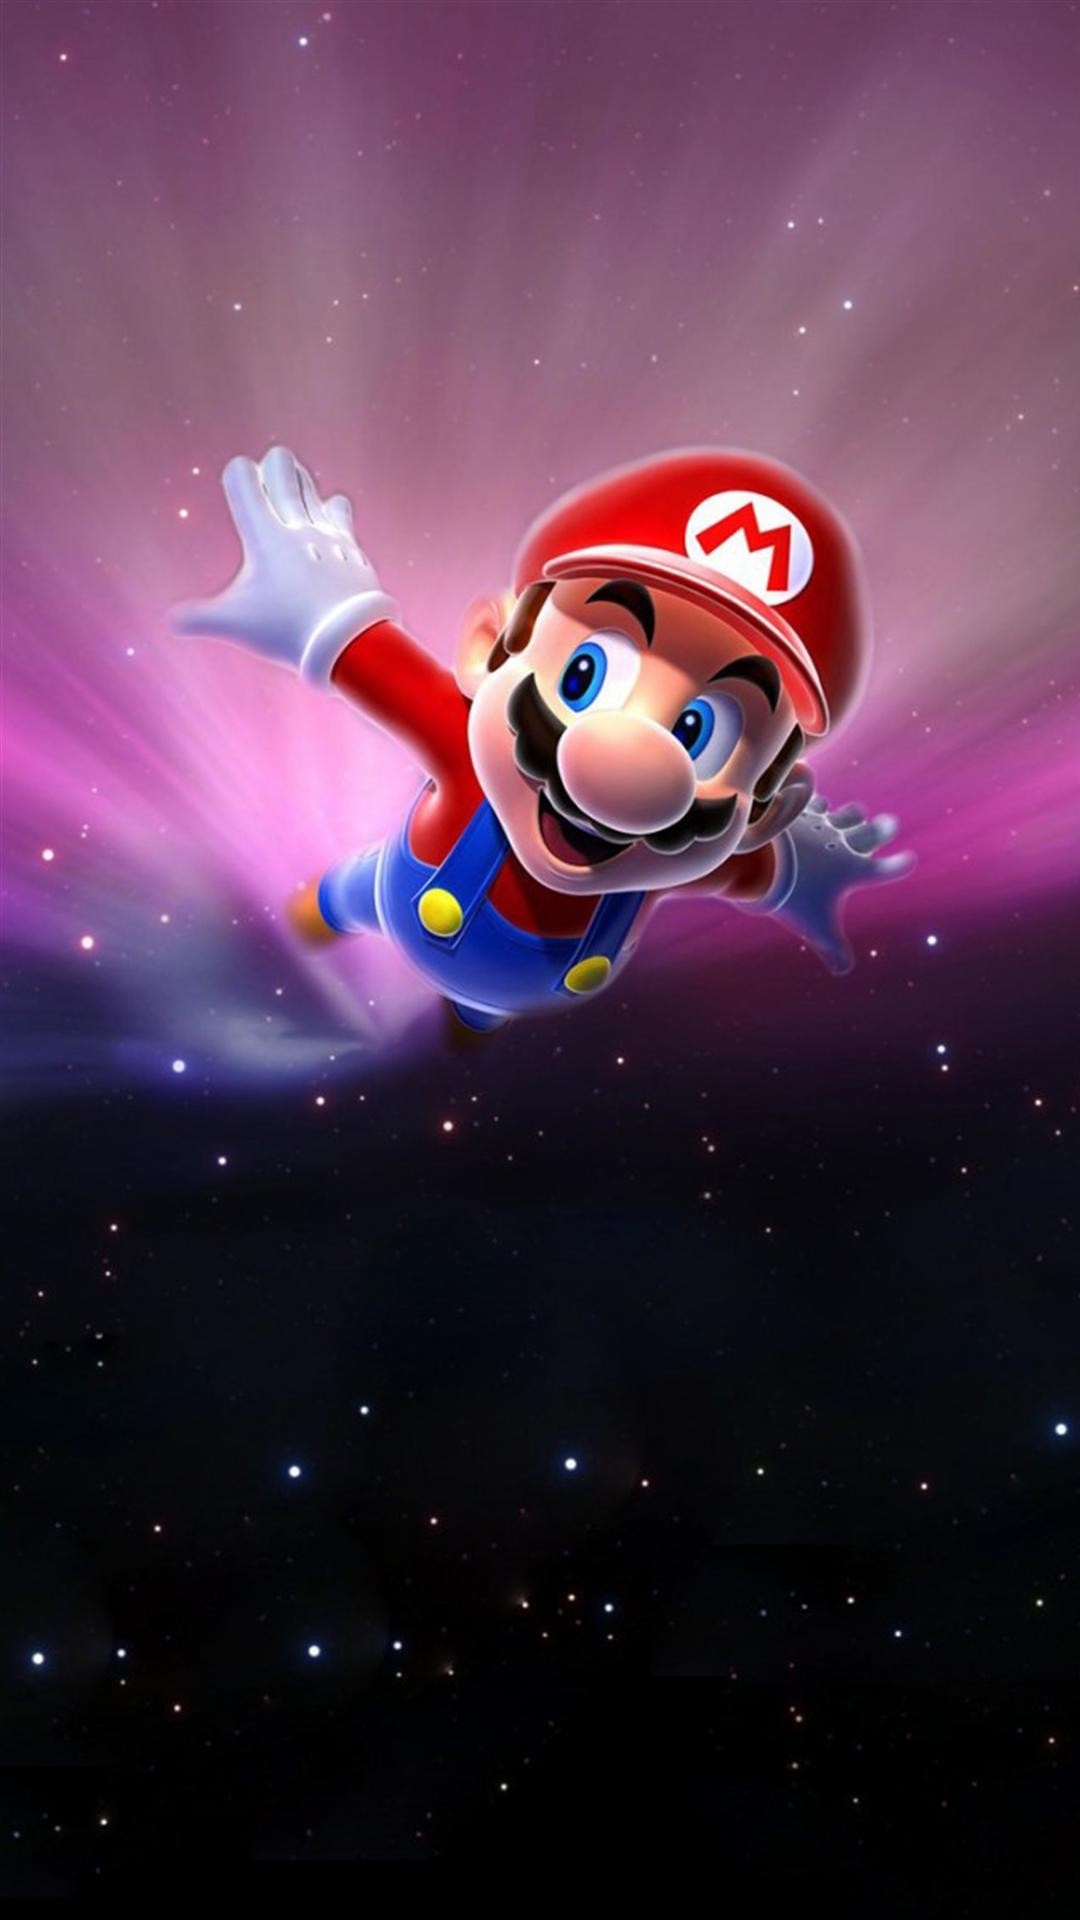 1080x1920 super Mario bros